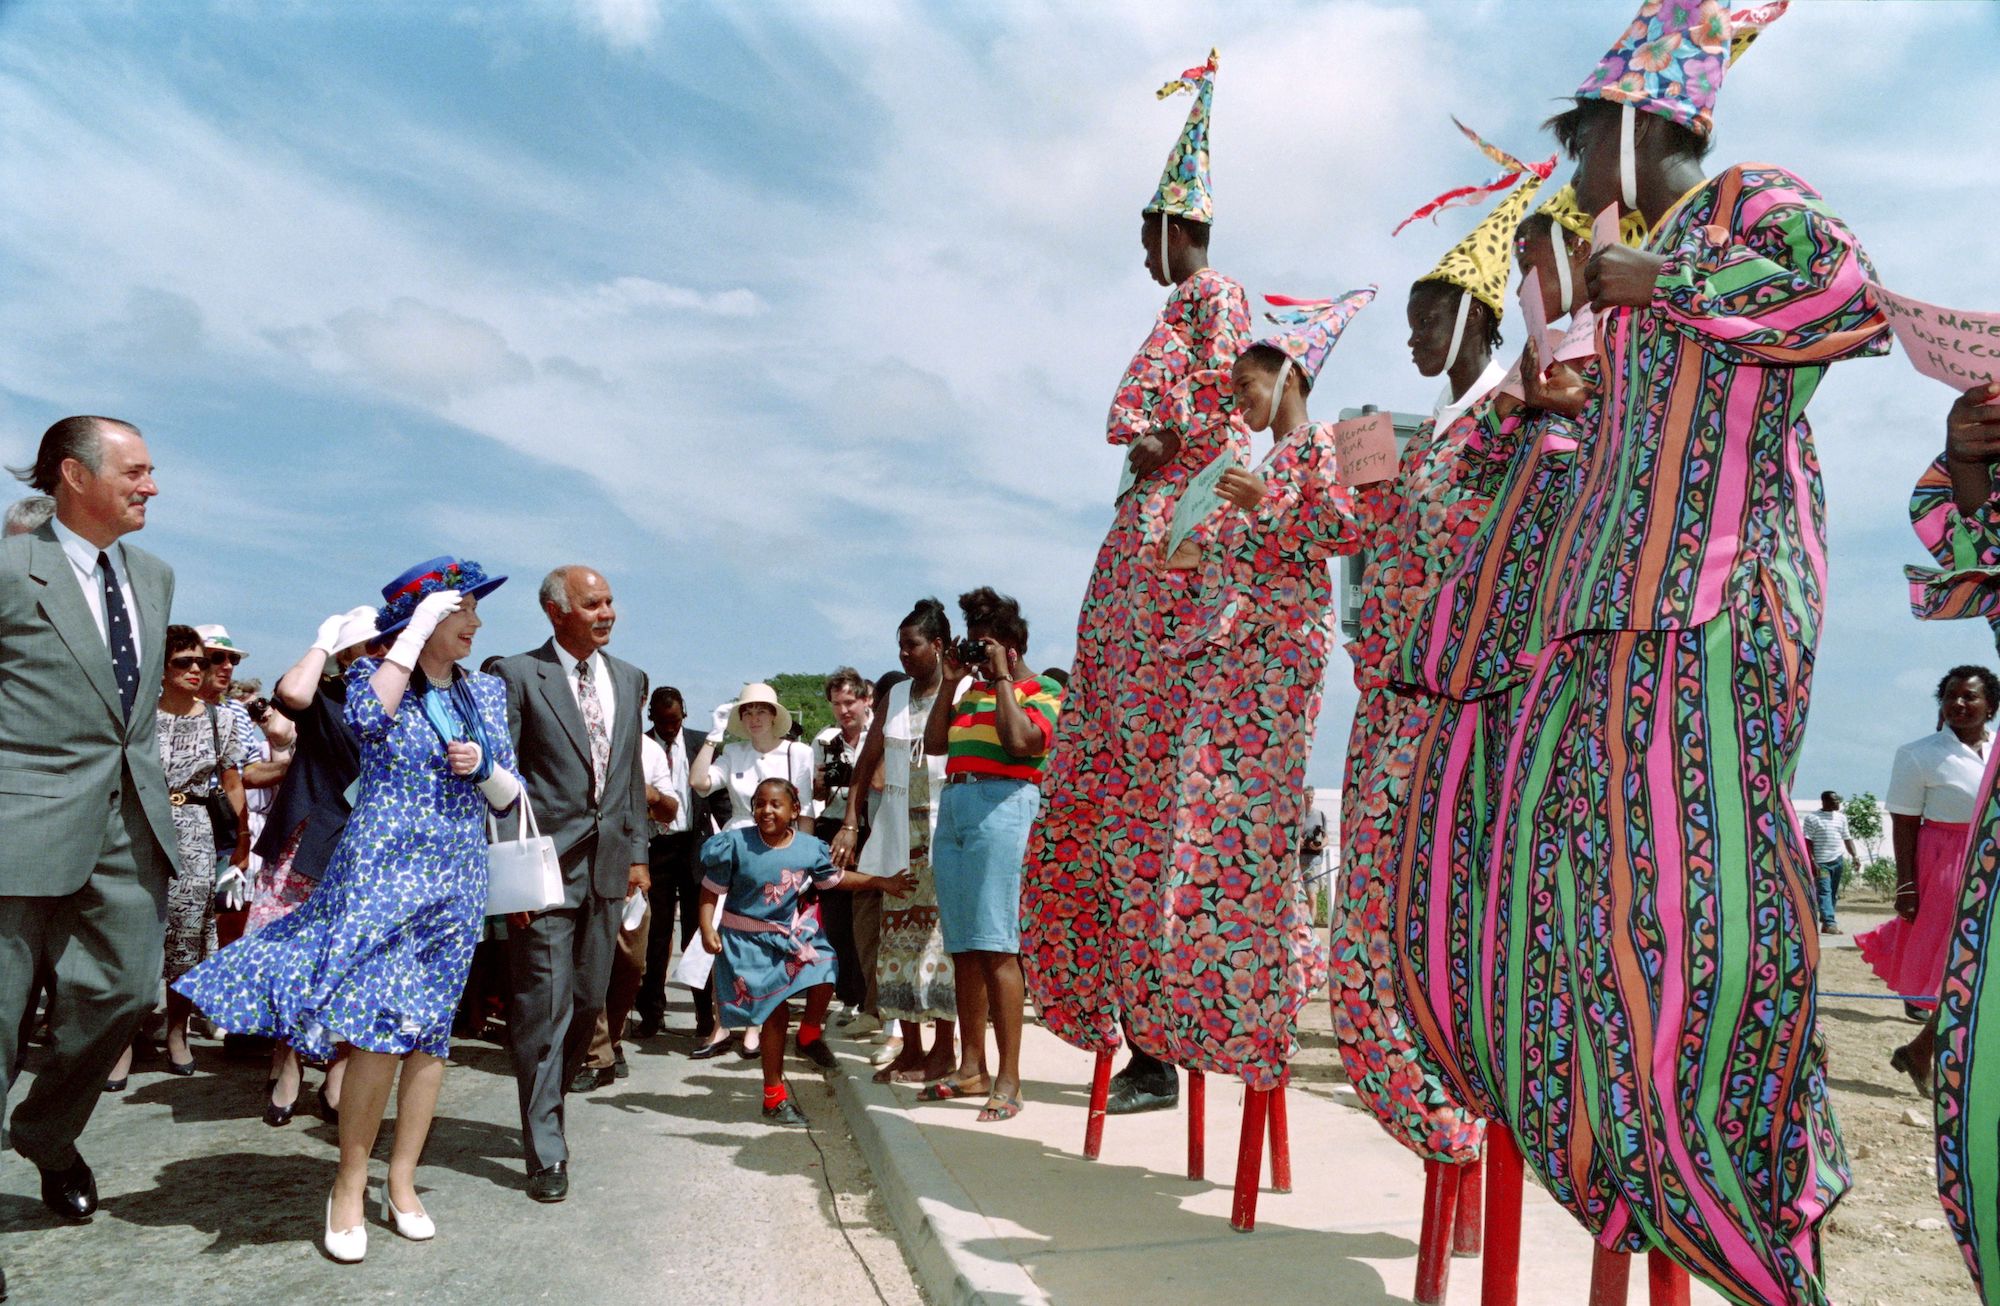 Queen Elizabeth II watches Anguillan boys on stilts